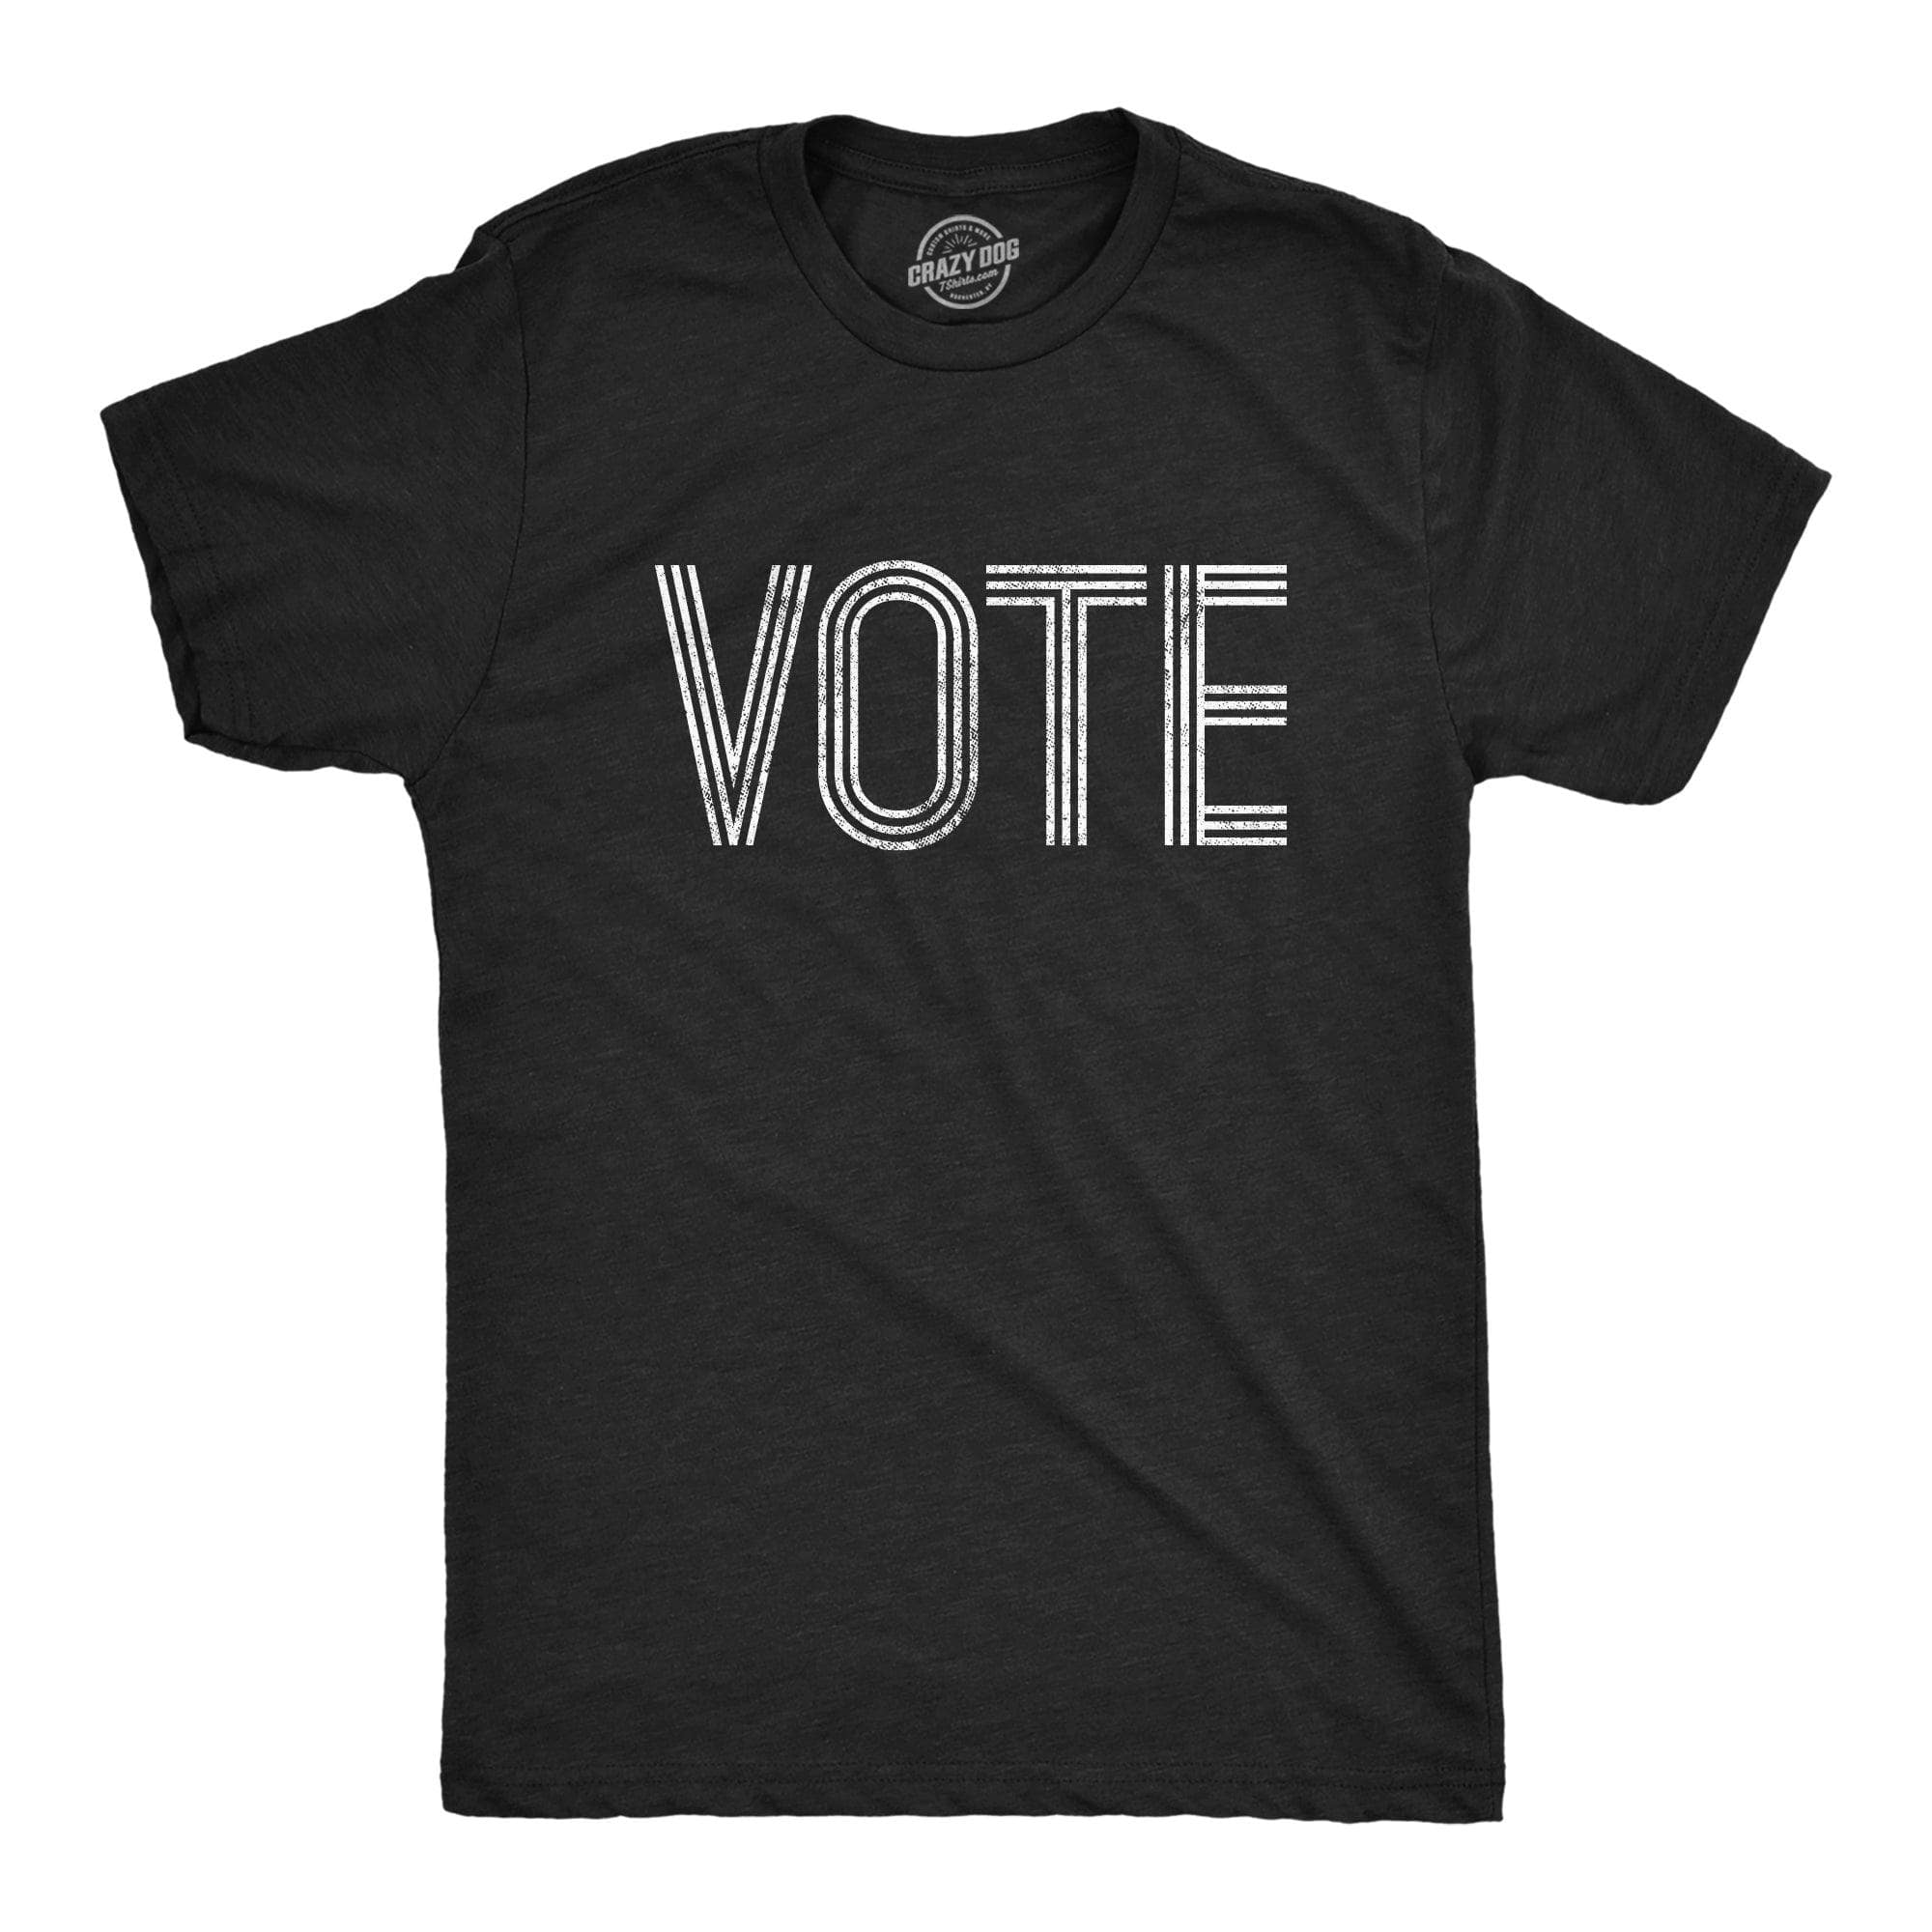 Vote Men's Tshirt  -  Crazy Dog T-Shirts